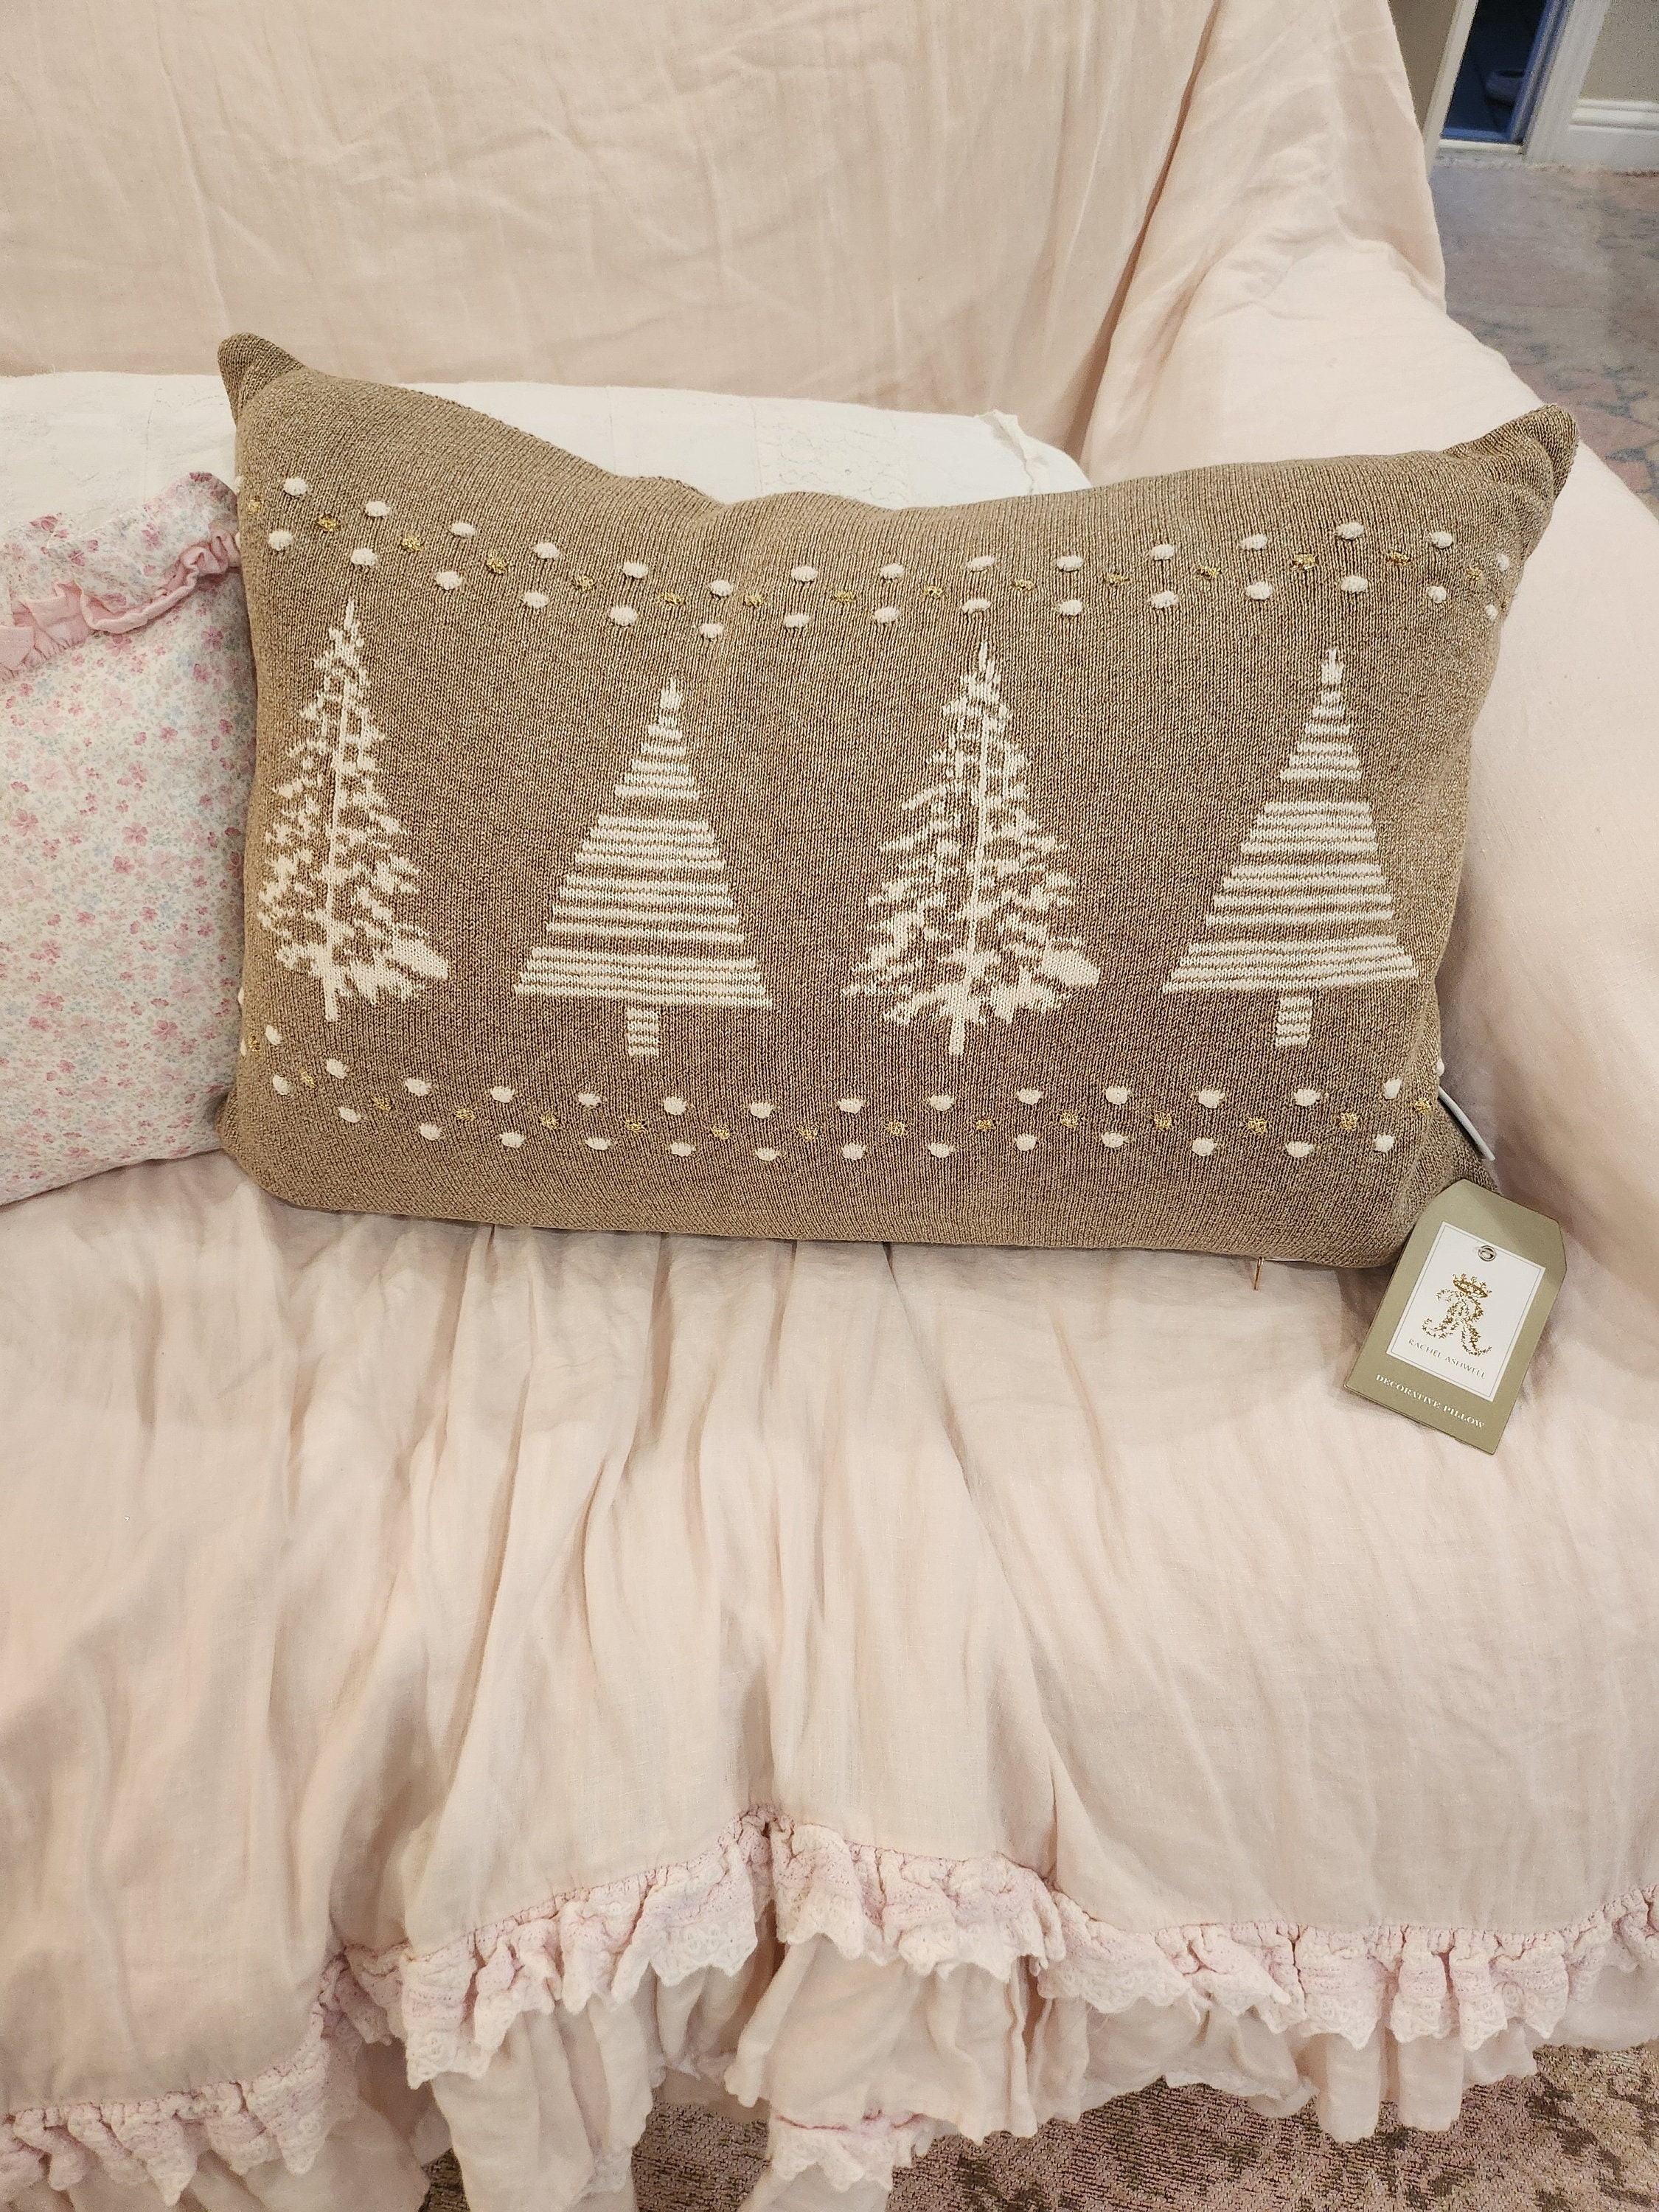 Tweetle Dee Design Co.: Christmas Wool Pillows